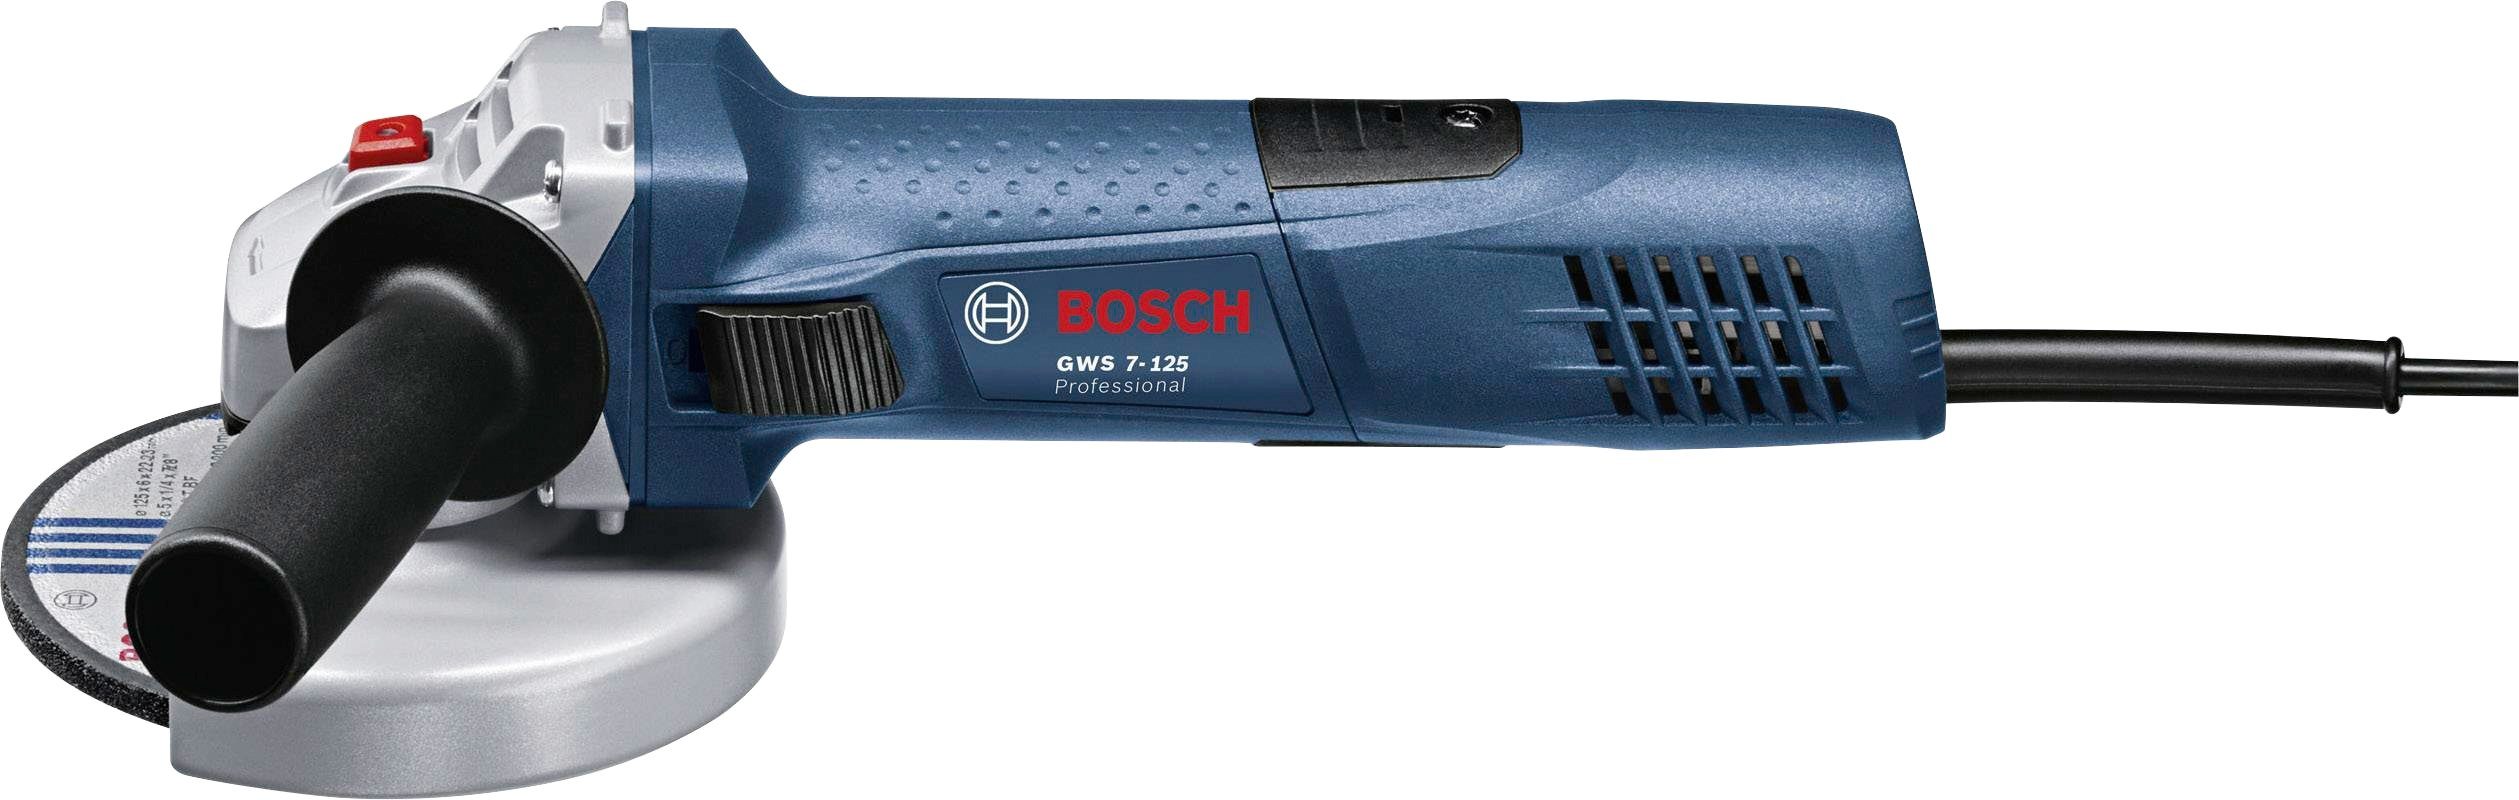 Bosch GWS 720 7-125, Winkelschleifer Professional W